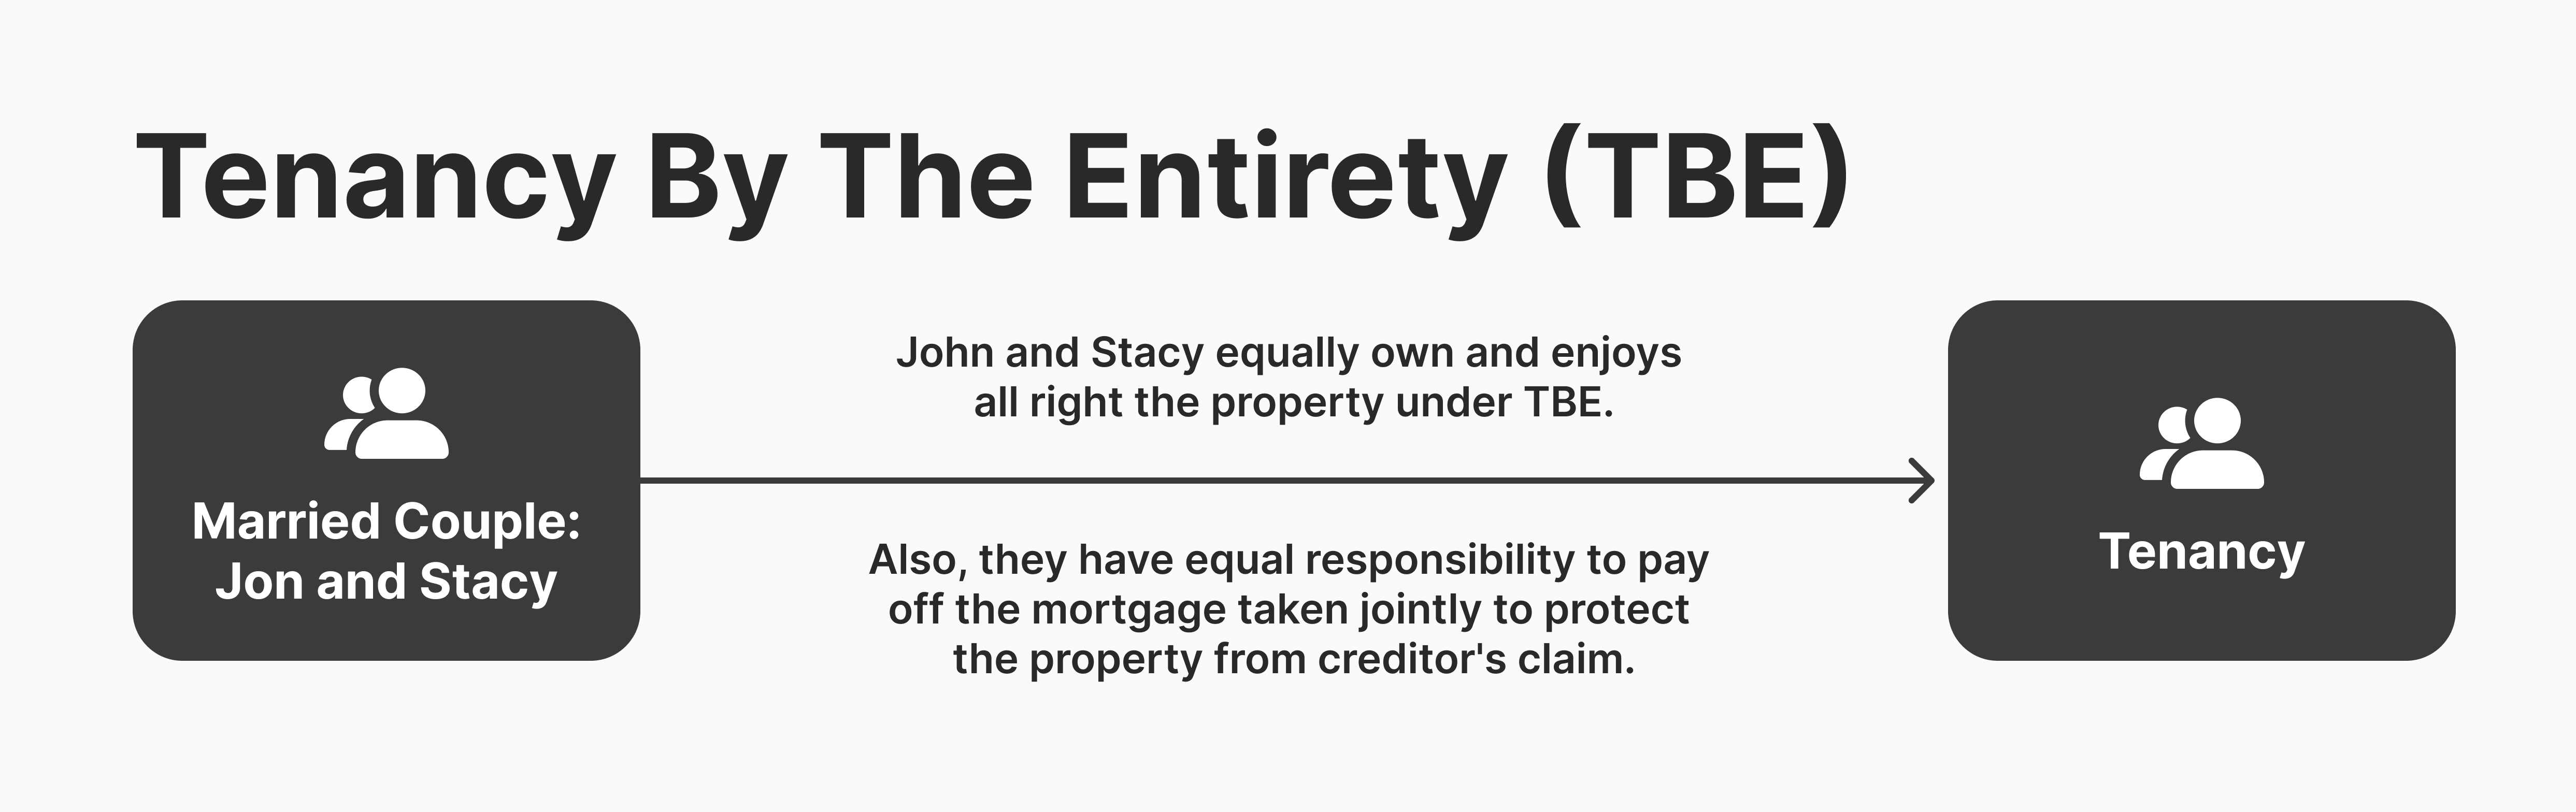 Tenancy by the Entirety (TBE)